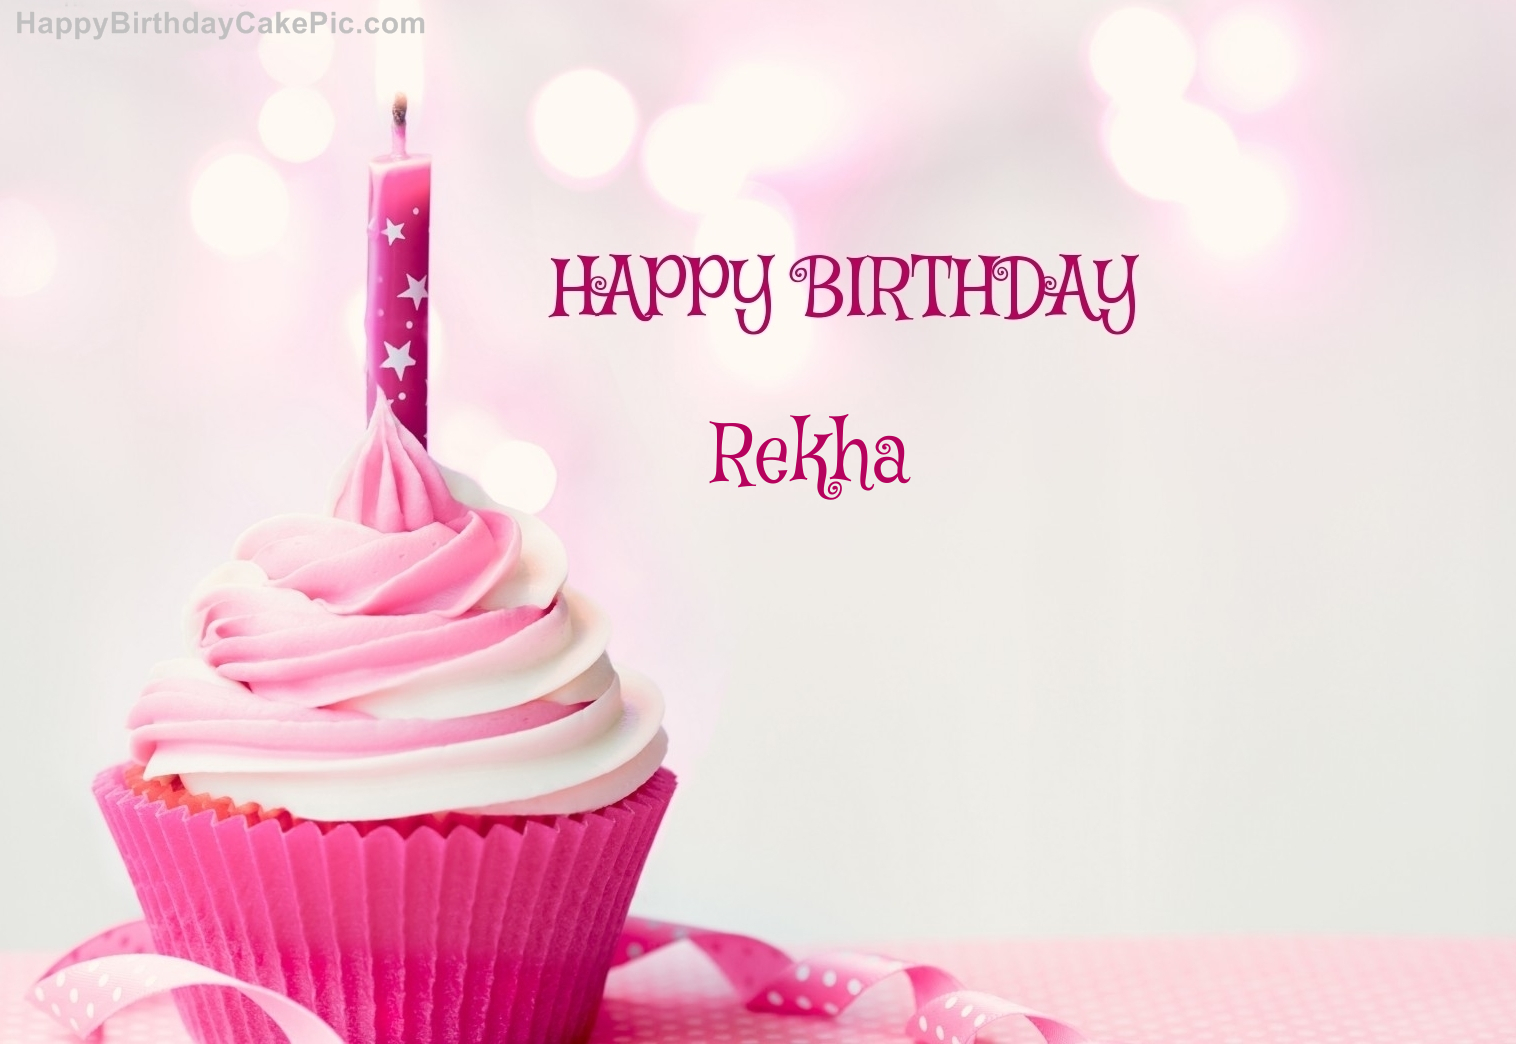 Rekha's Cakes - Princess cake! Happy Birthday Dhruvi! | Facebook